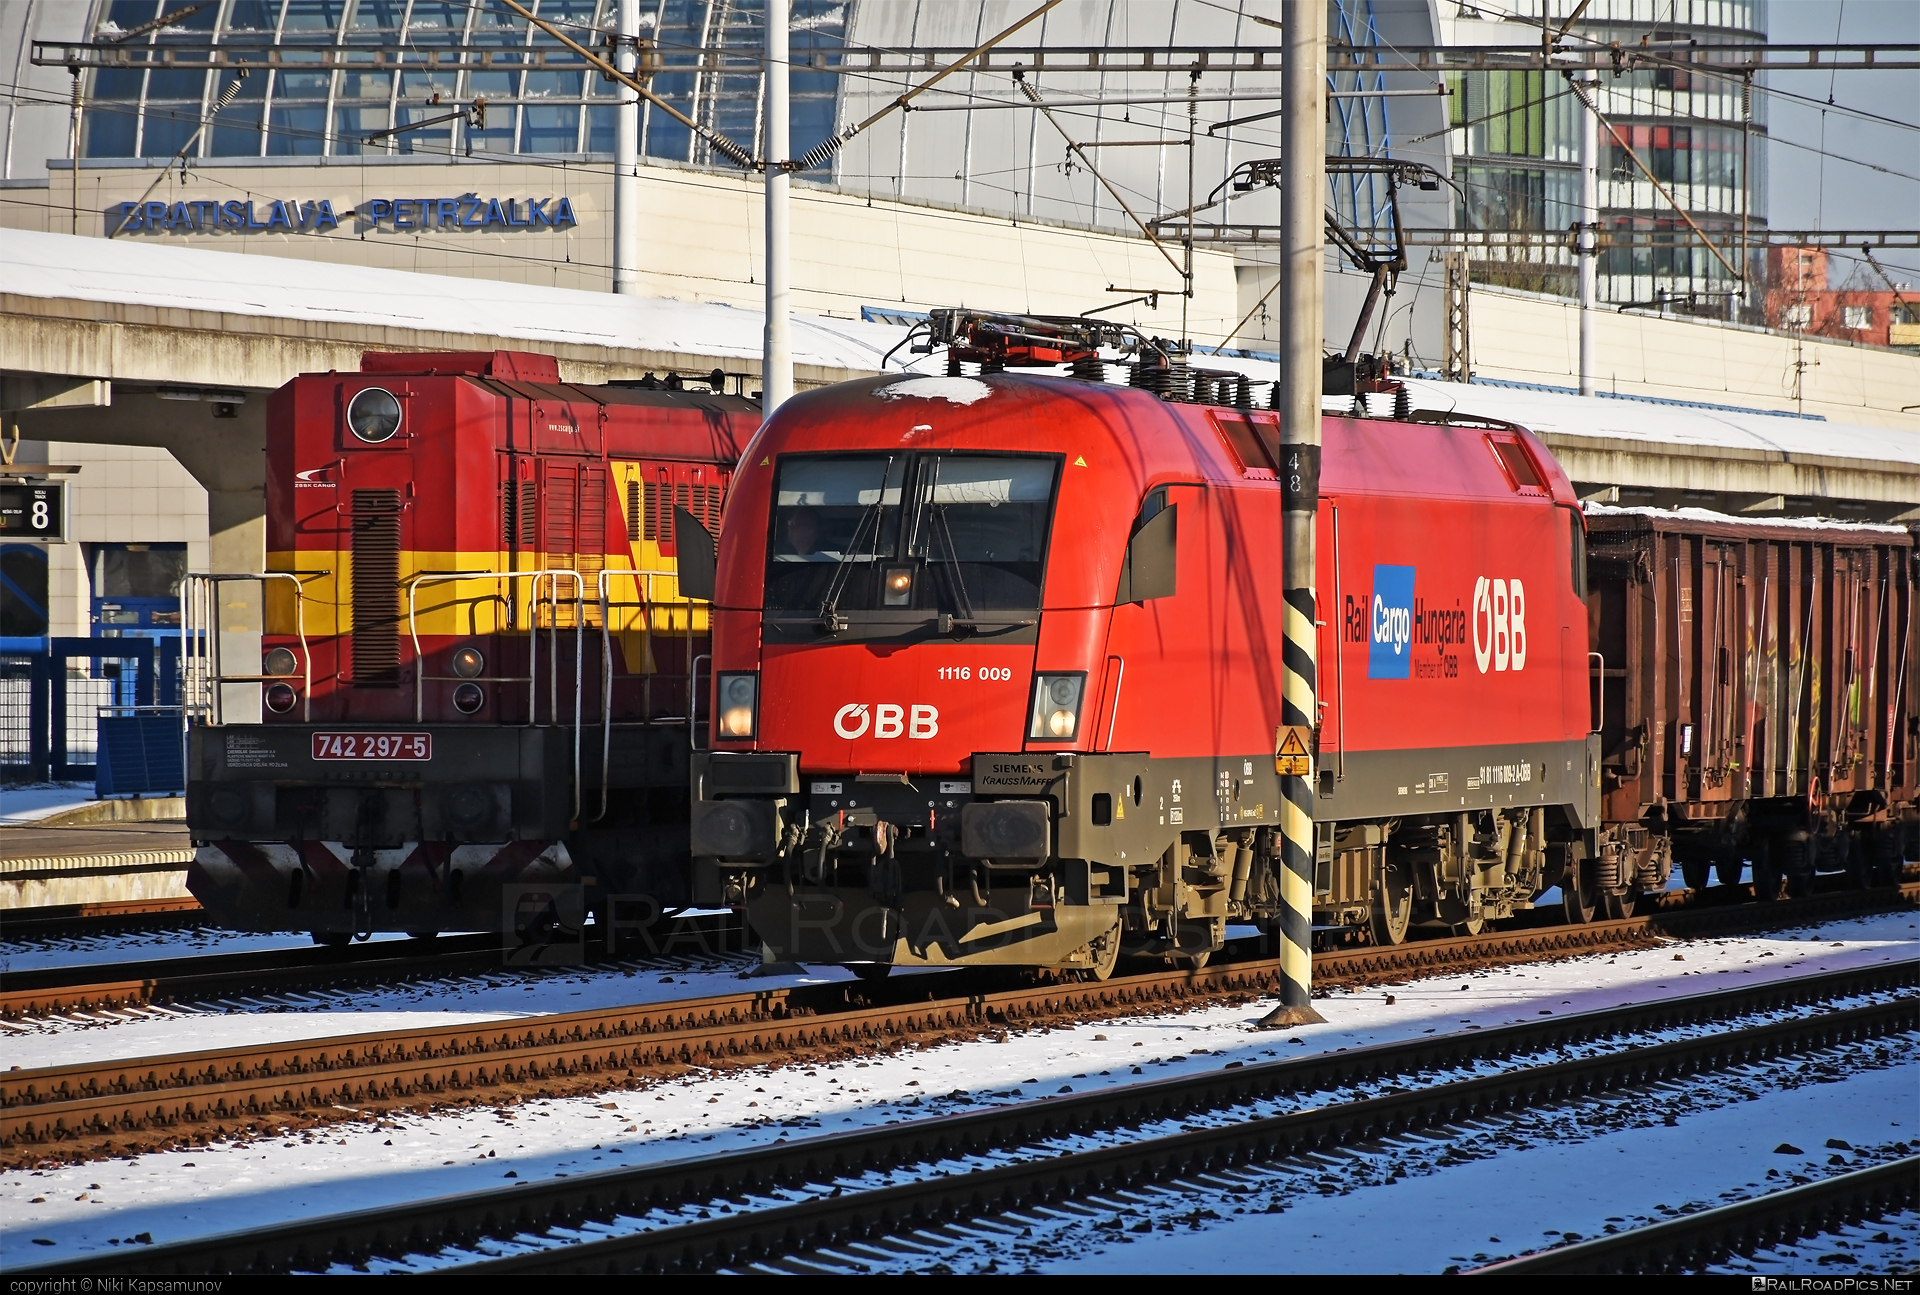 Siemens ES 64 U2 - 1116 009 operated by Rail Cargo Hungaria ZRt. #es64 #es64u2 #eurosprinter #obb #openwagon #osterreichischebundesbahnen #rch #siemens #siemenses64 #siemenses64u2 #siemenstaurus #taurus #tauruslocomotive